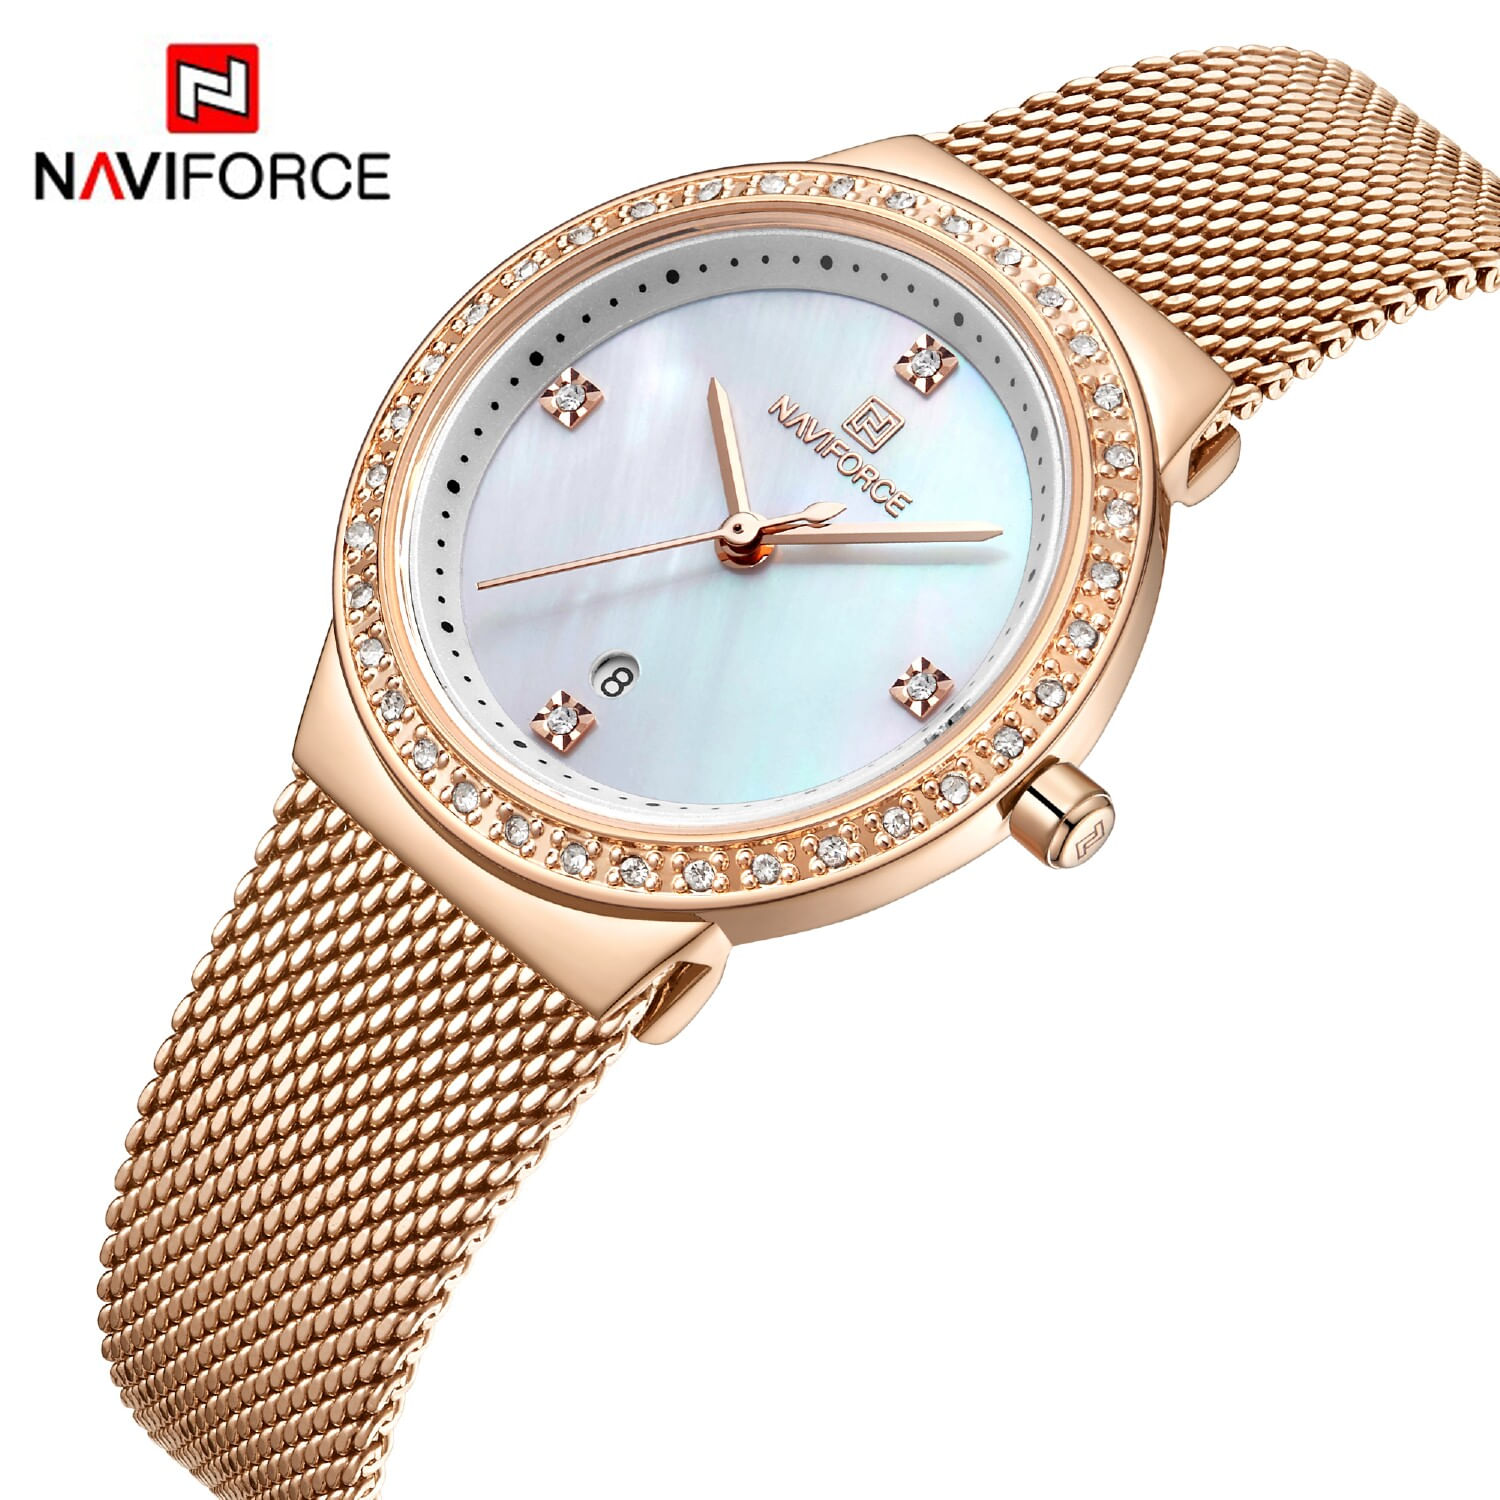 Reloj Naviforce Dama NF5005 ORO ROSA Analógico Calendario Correa Acero Inoxidable Elegante